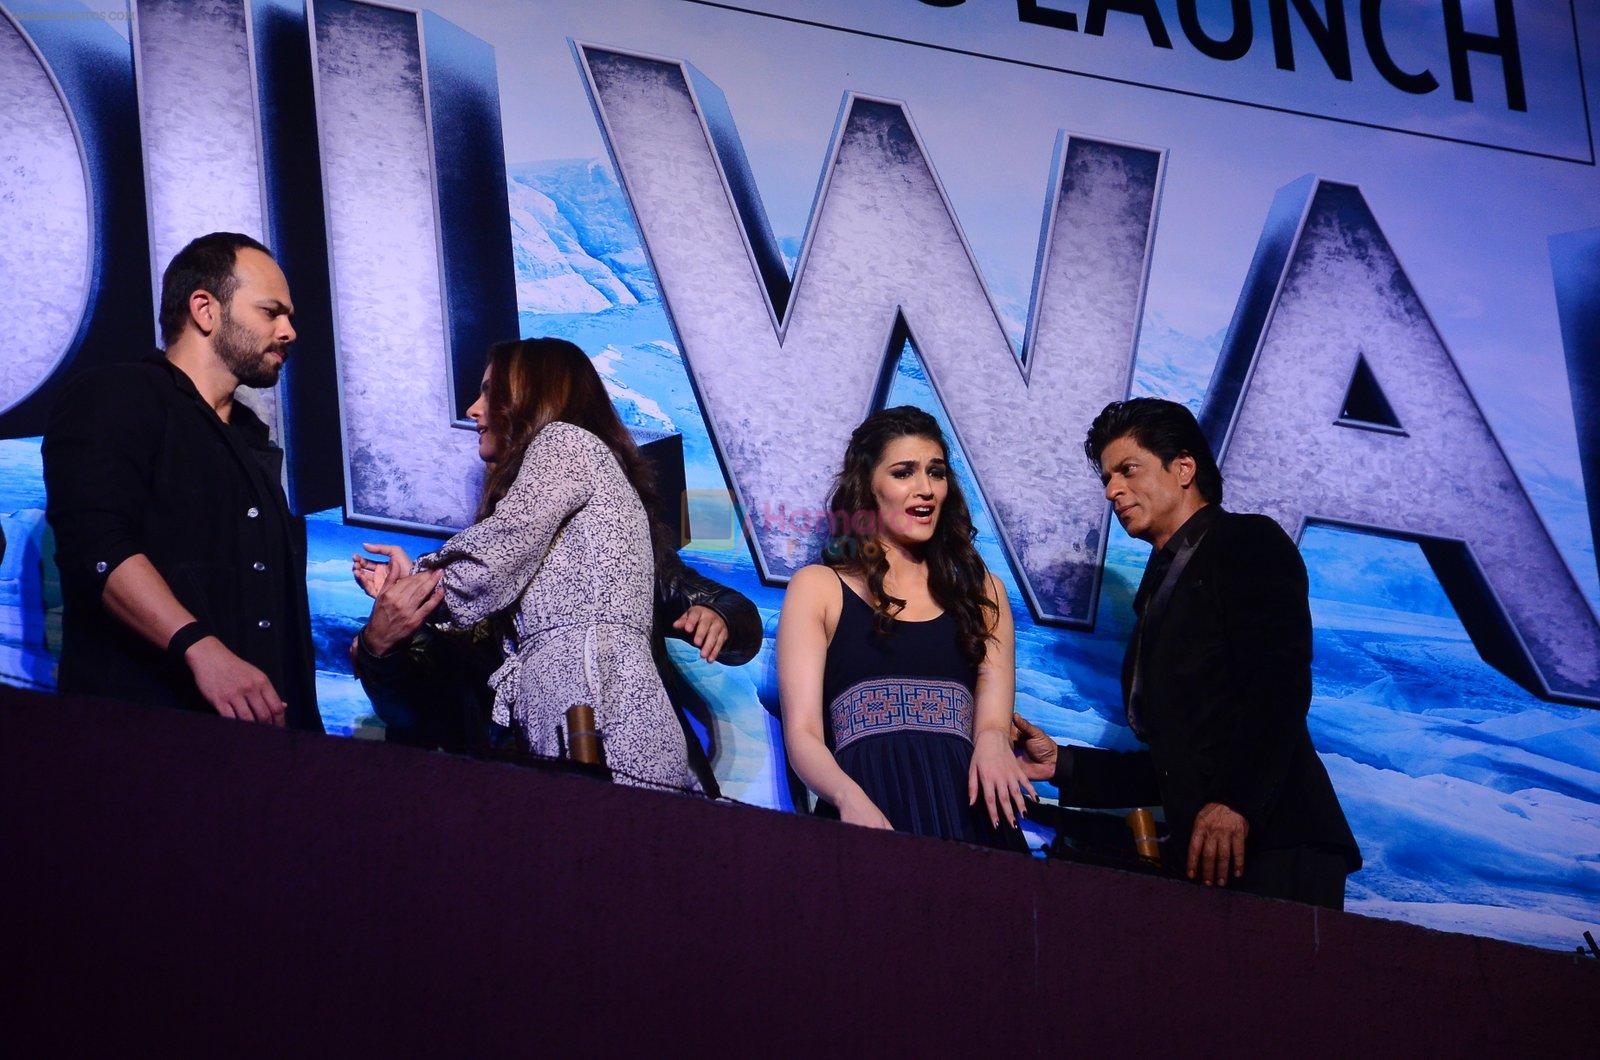 Shahrukh Khan, Kriti Sanon, Varun Dhawan, Kajol, Rohit Shetty at Dilwale song launch in Mumbai on 18th Nov 2015